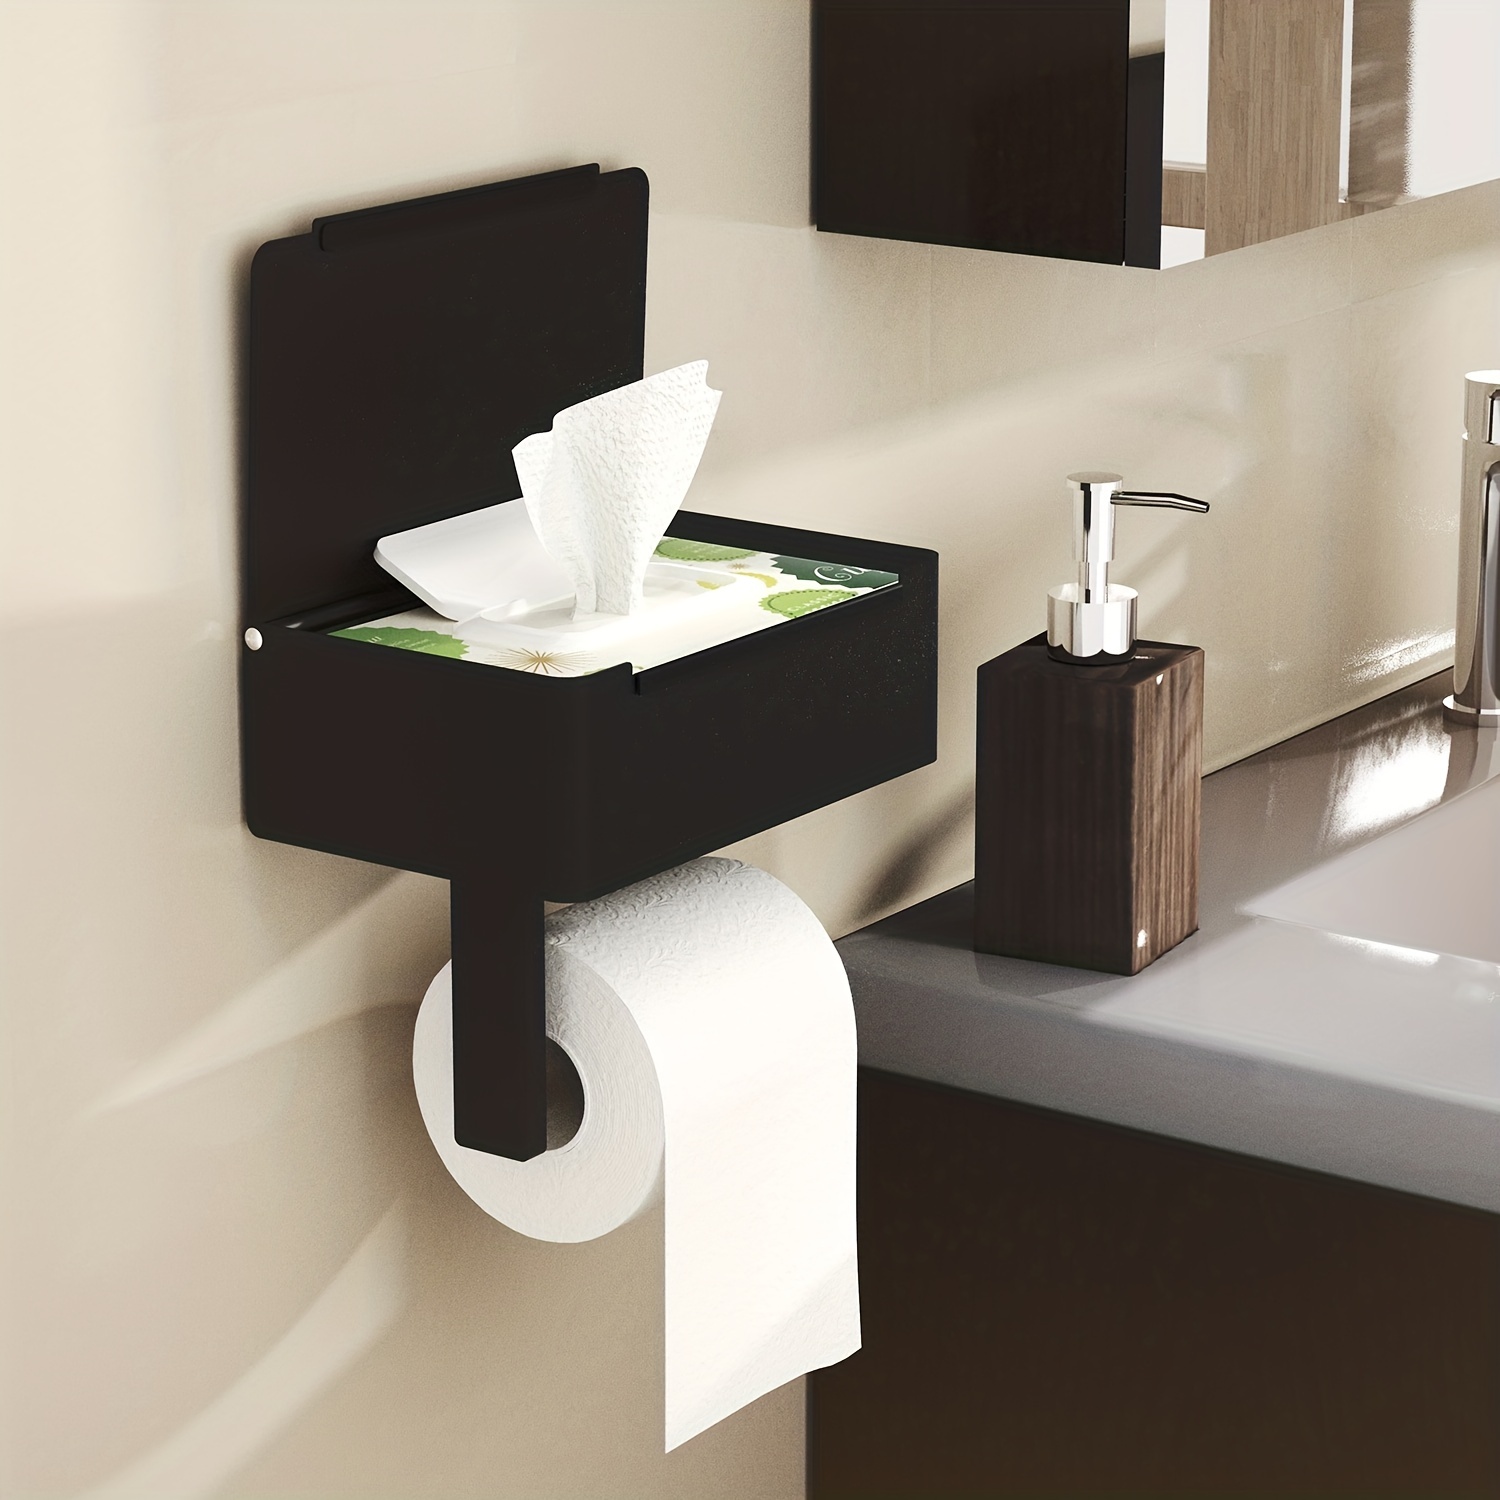 Matte black wall-mount toilet paper holder with shelf